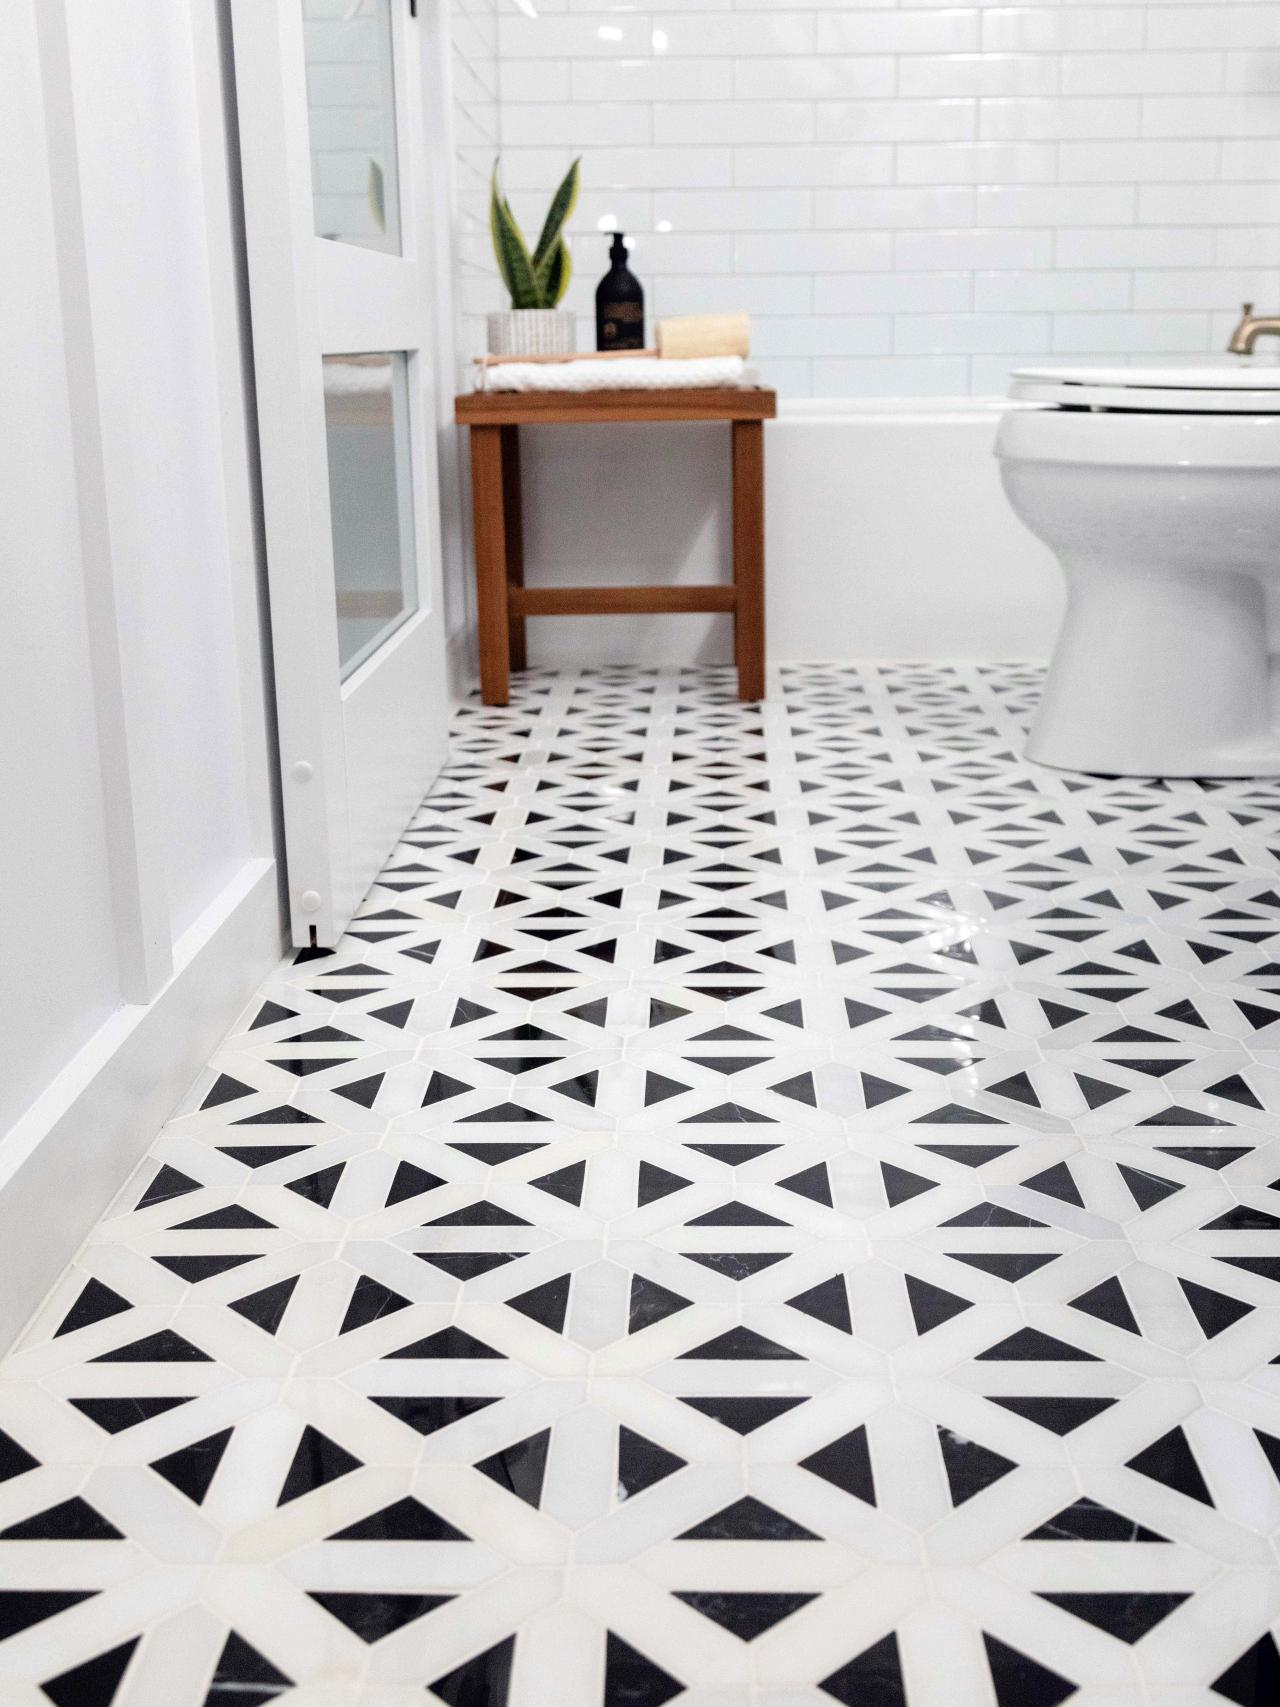 How To Lay A Tile Floor, Change Bathroom Floor Tile Color